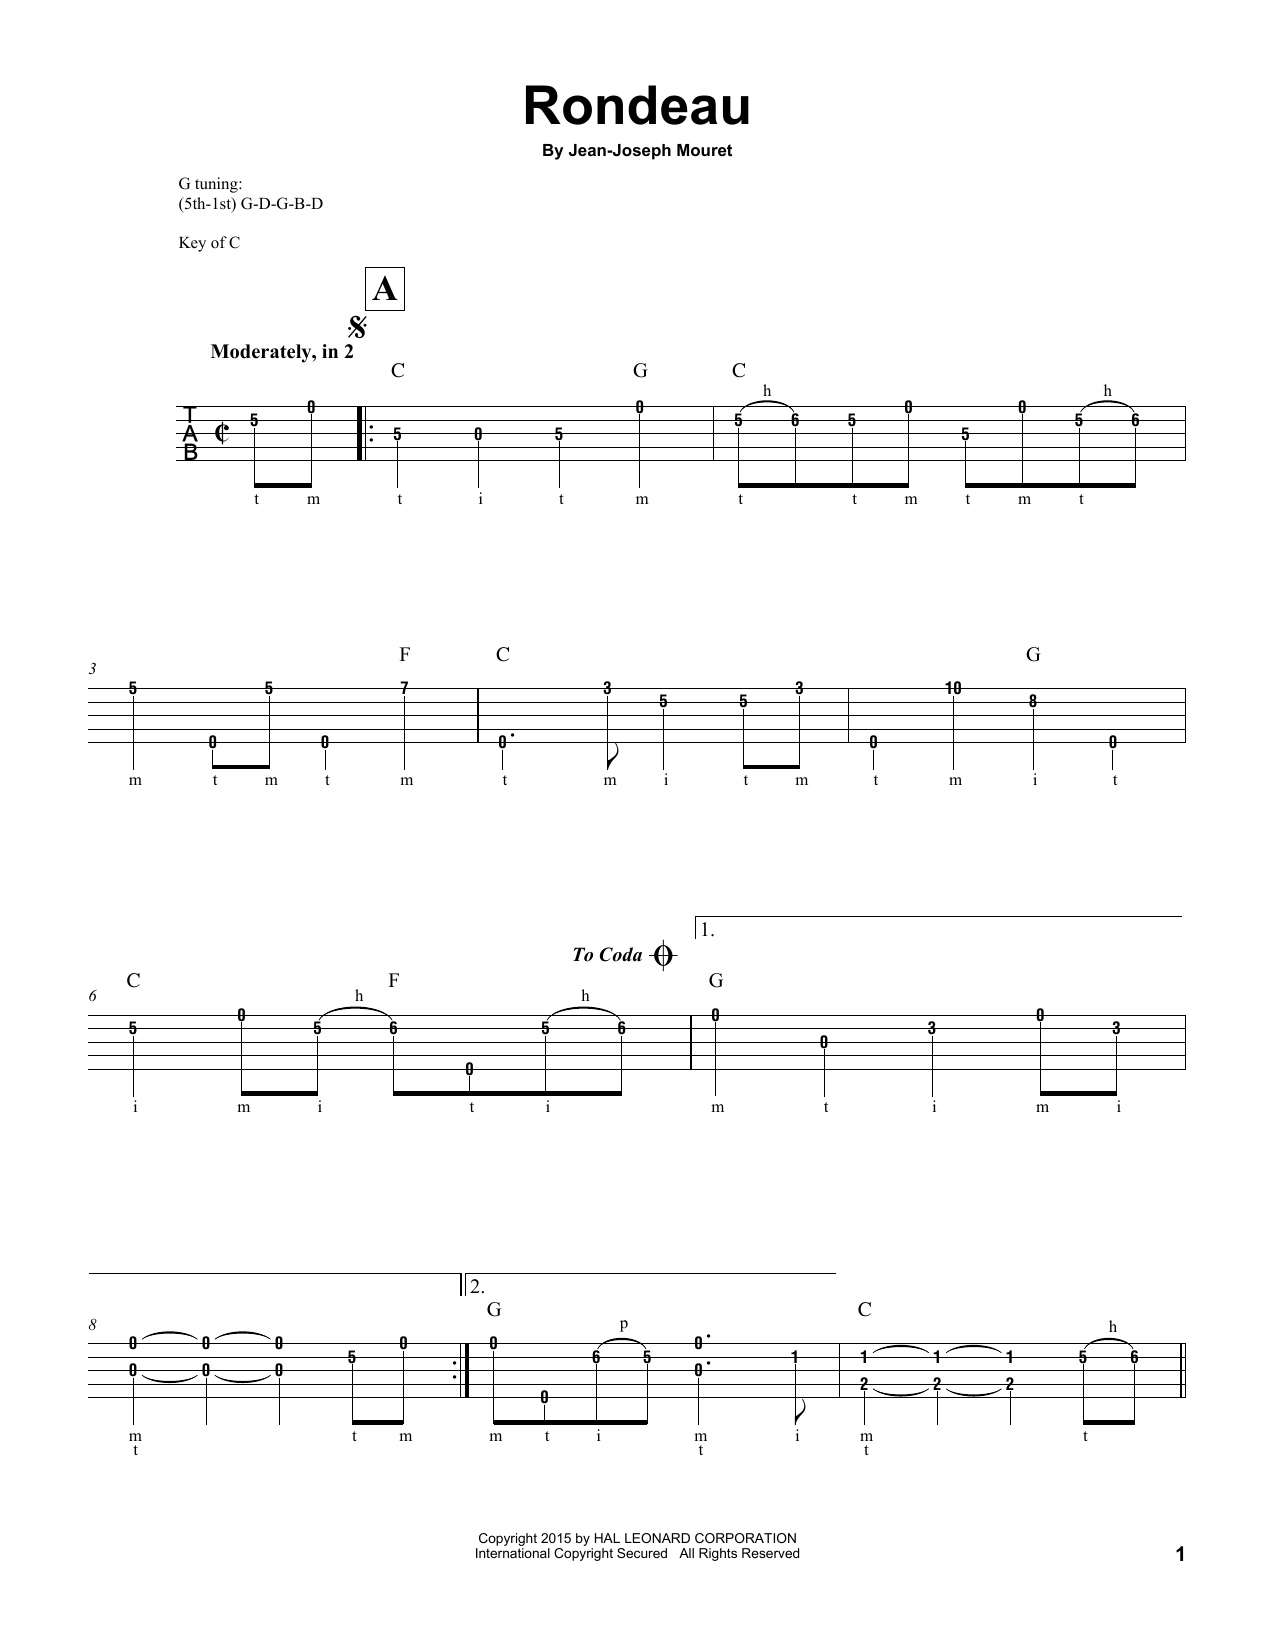 Jean-Joseph Mouret Fanfare Rondeau Sheet Music Notes & Chords for Clarinet Duet - Download or Print PDF